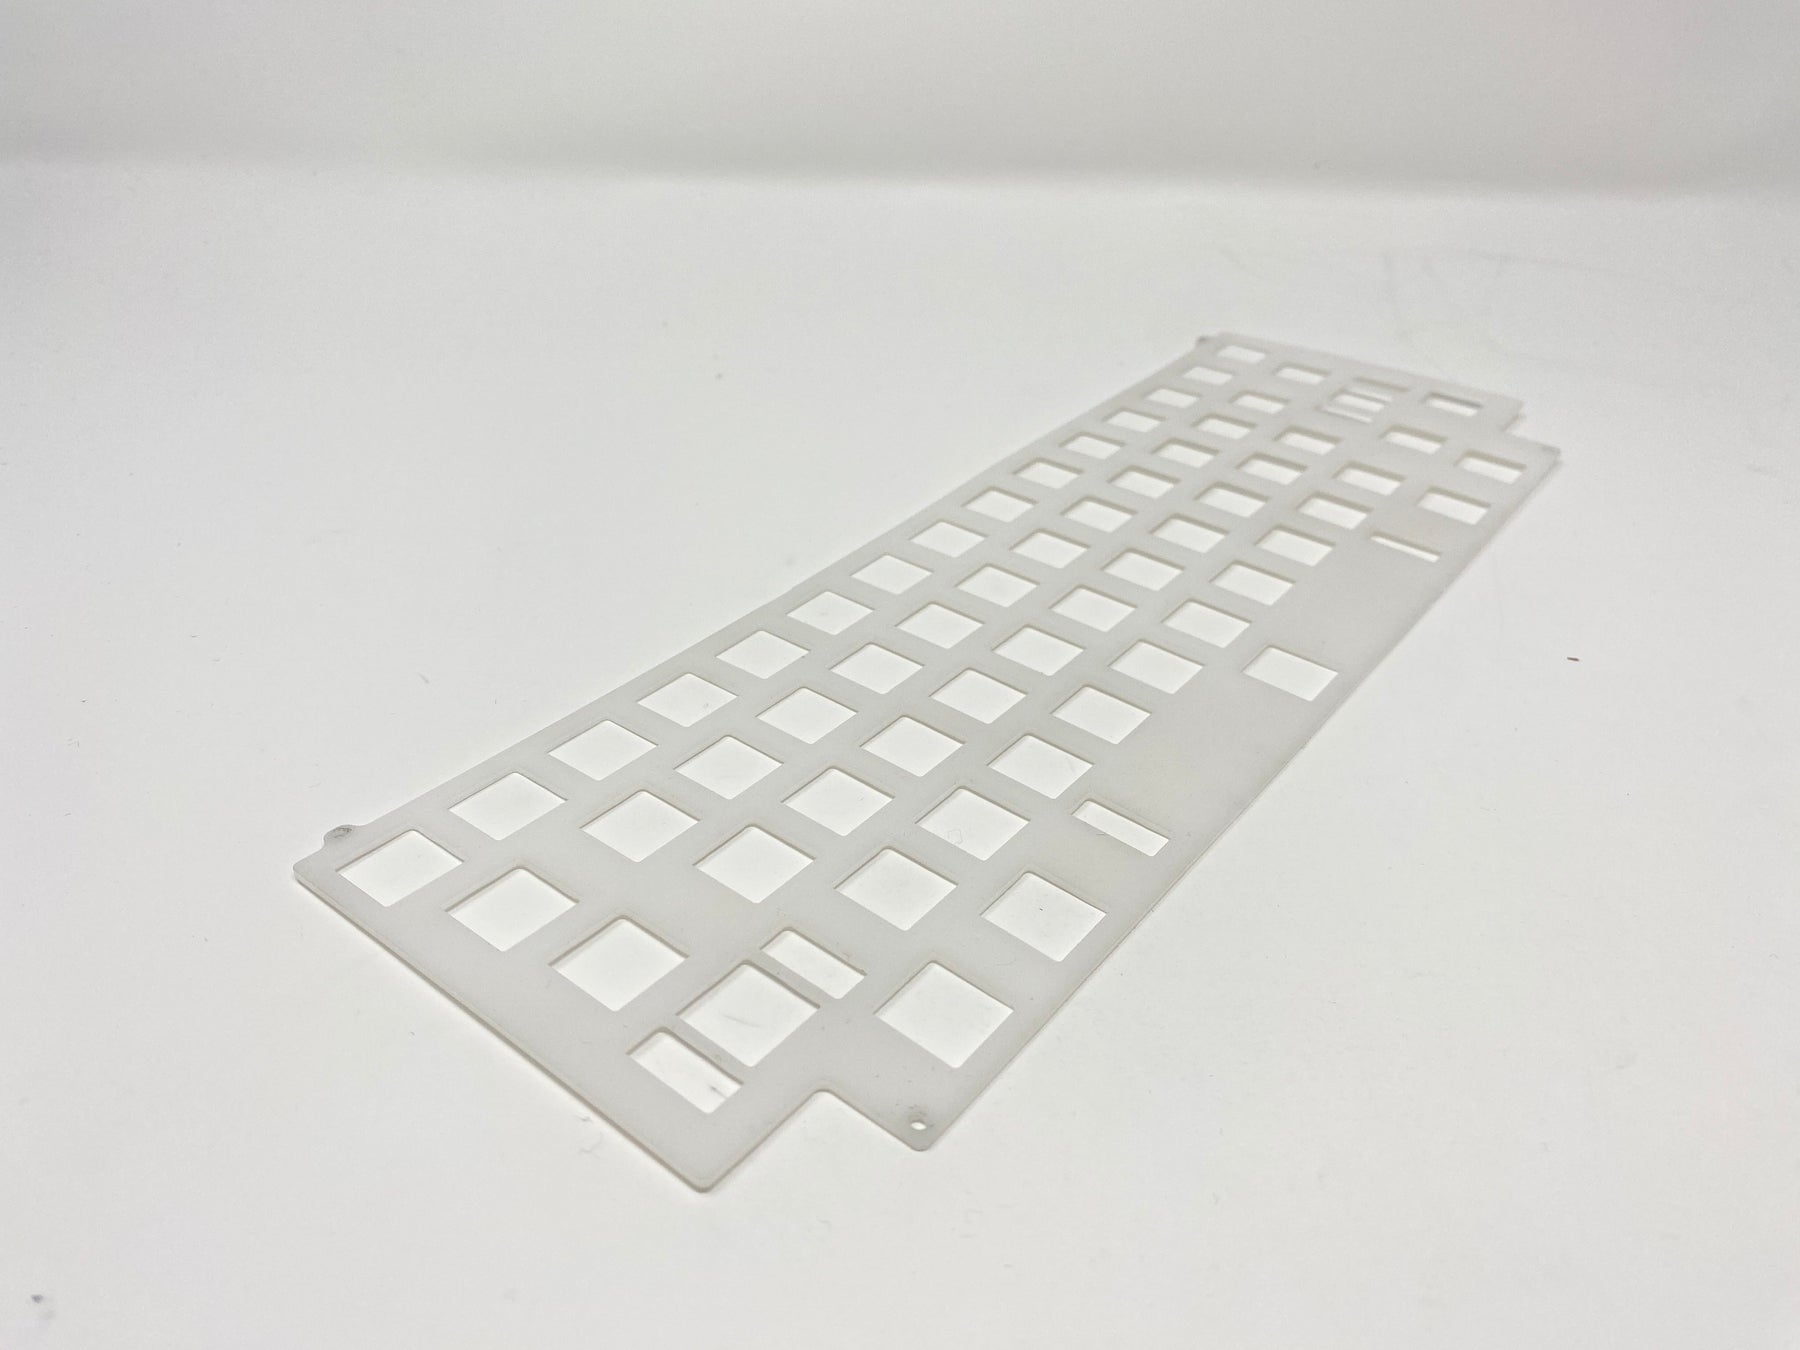 [GB] Swiss-Cheeseboard Keyboard Kit - Extras